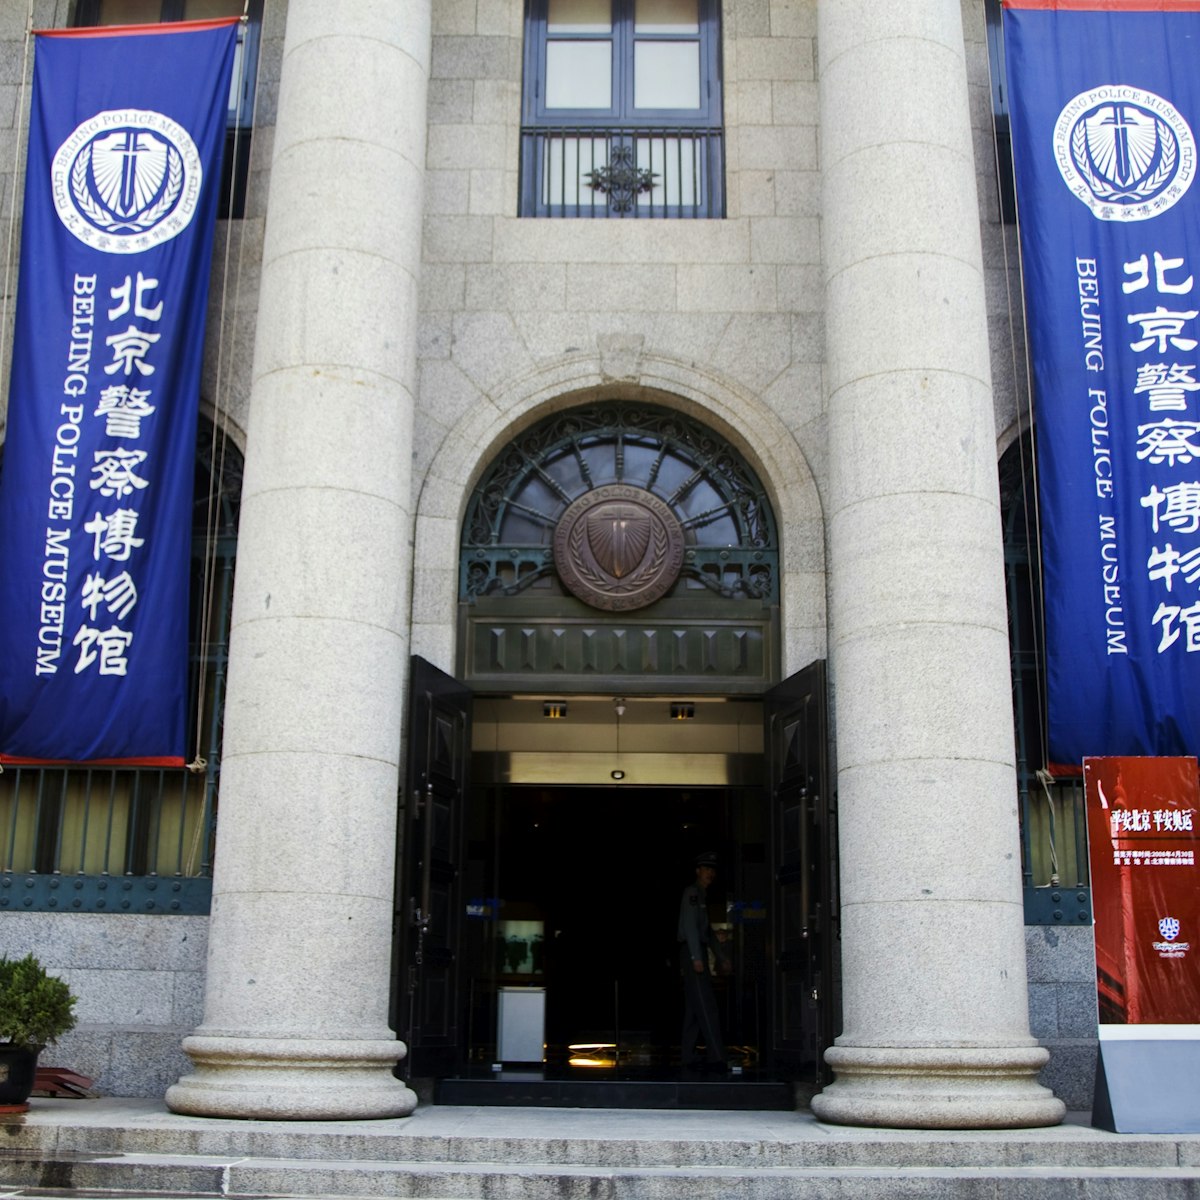 Beijing Police Museum entrance.